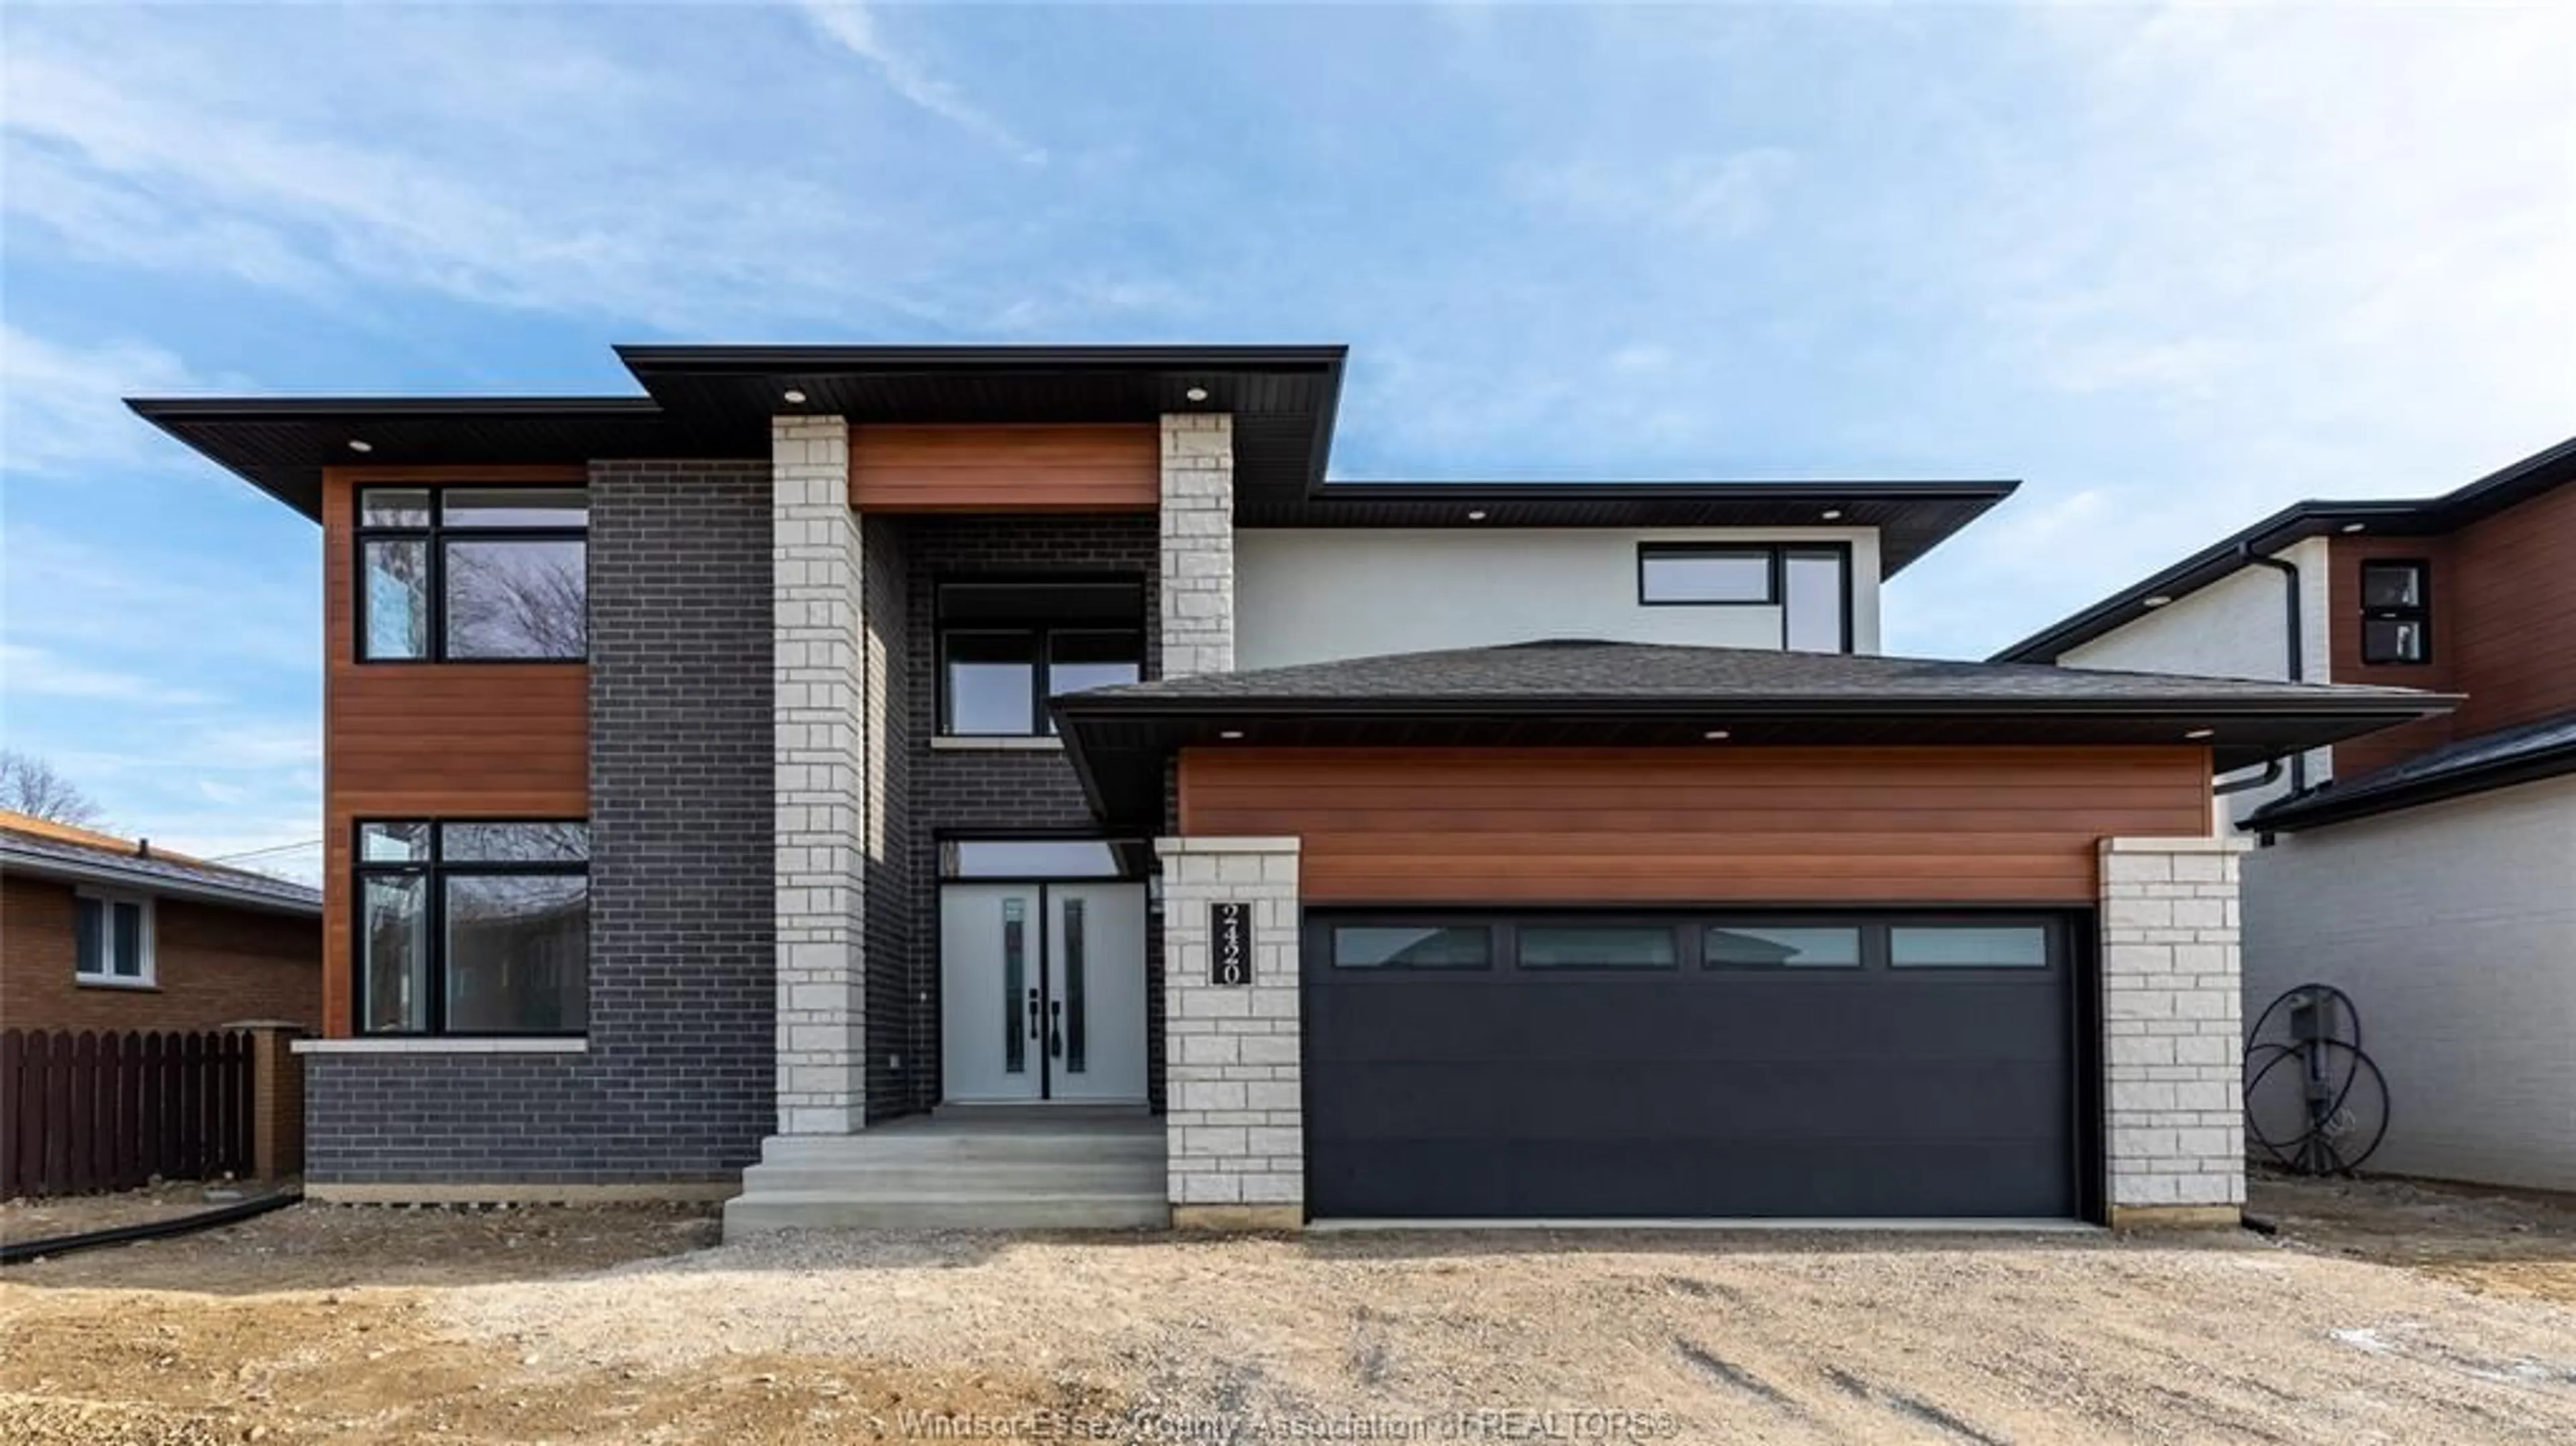 Home with brick exterior material for 2420 Roxborough, Windsor Ontario N9E 2Z8